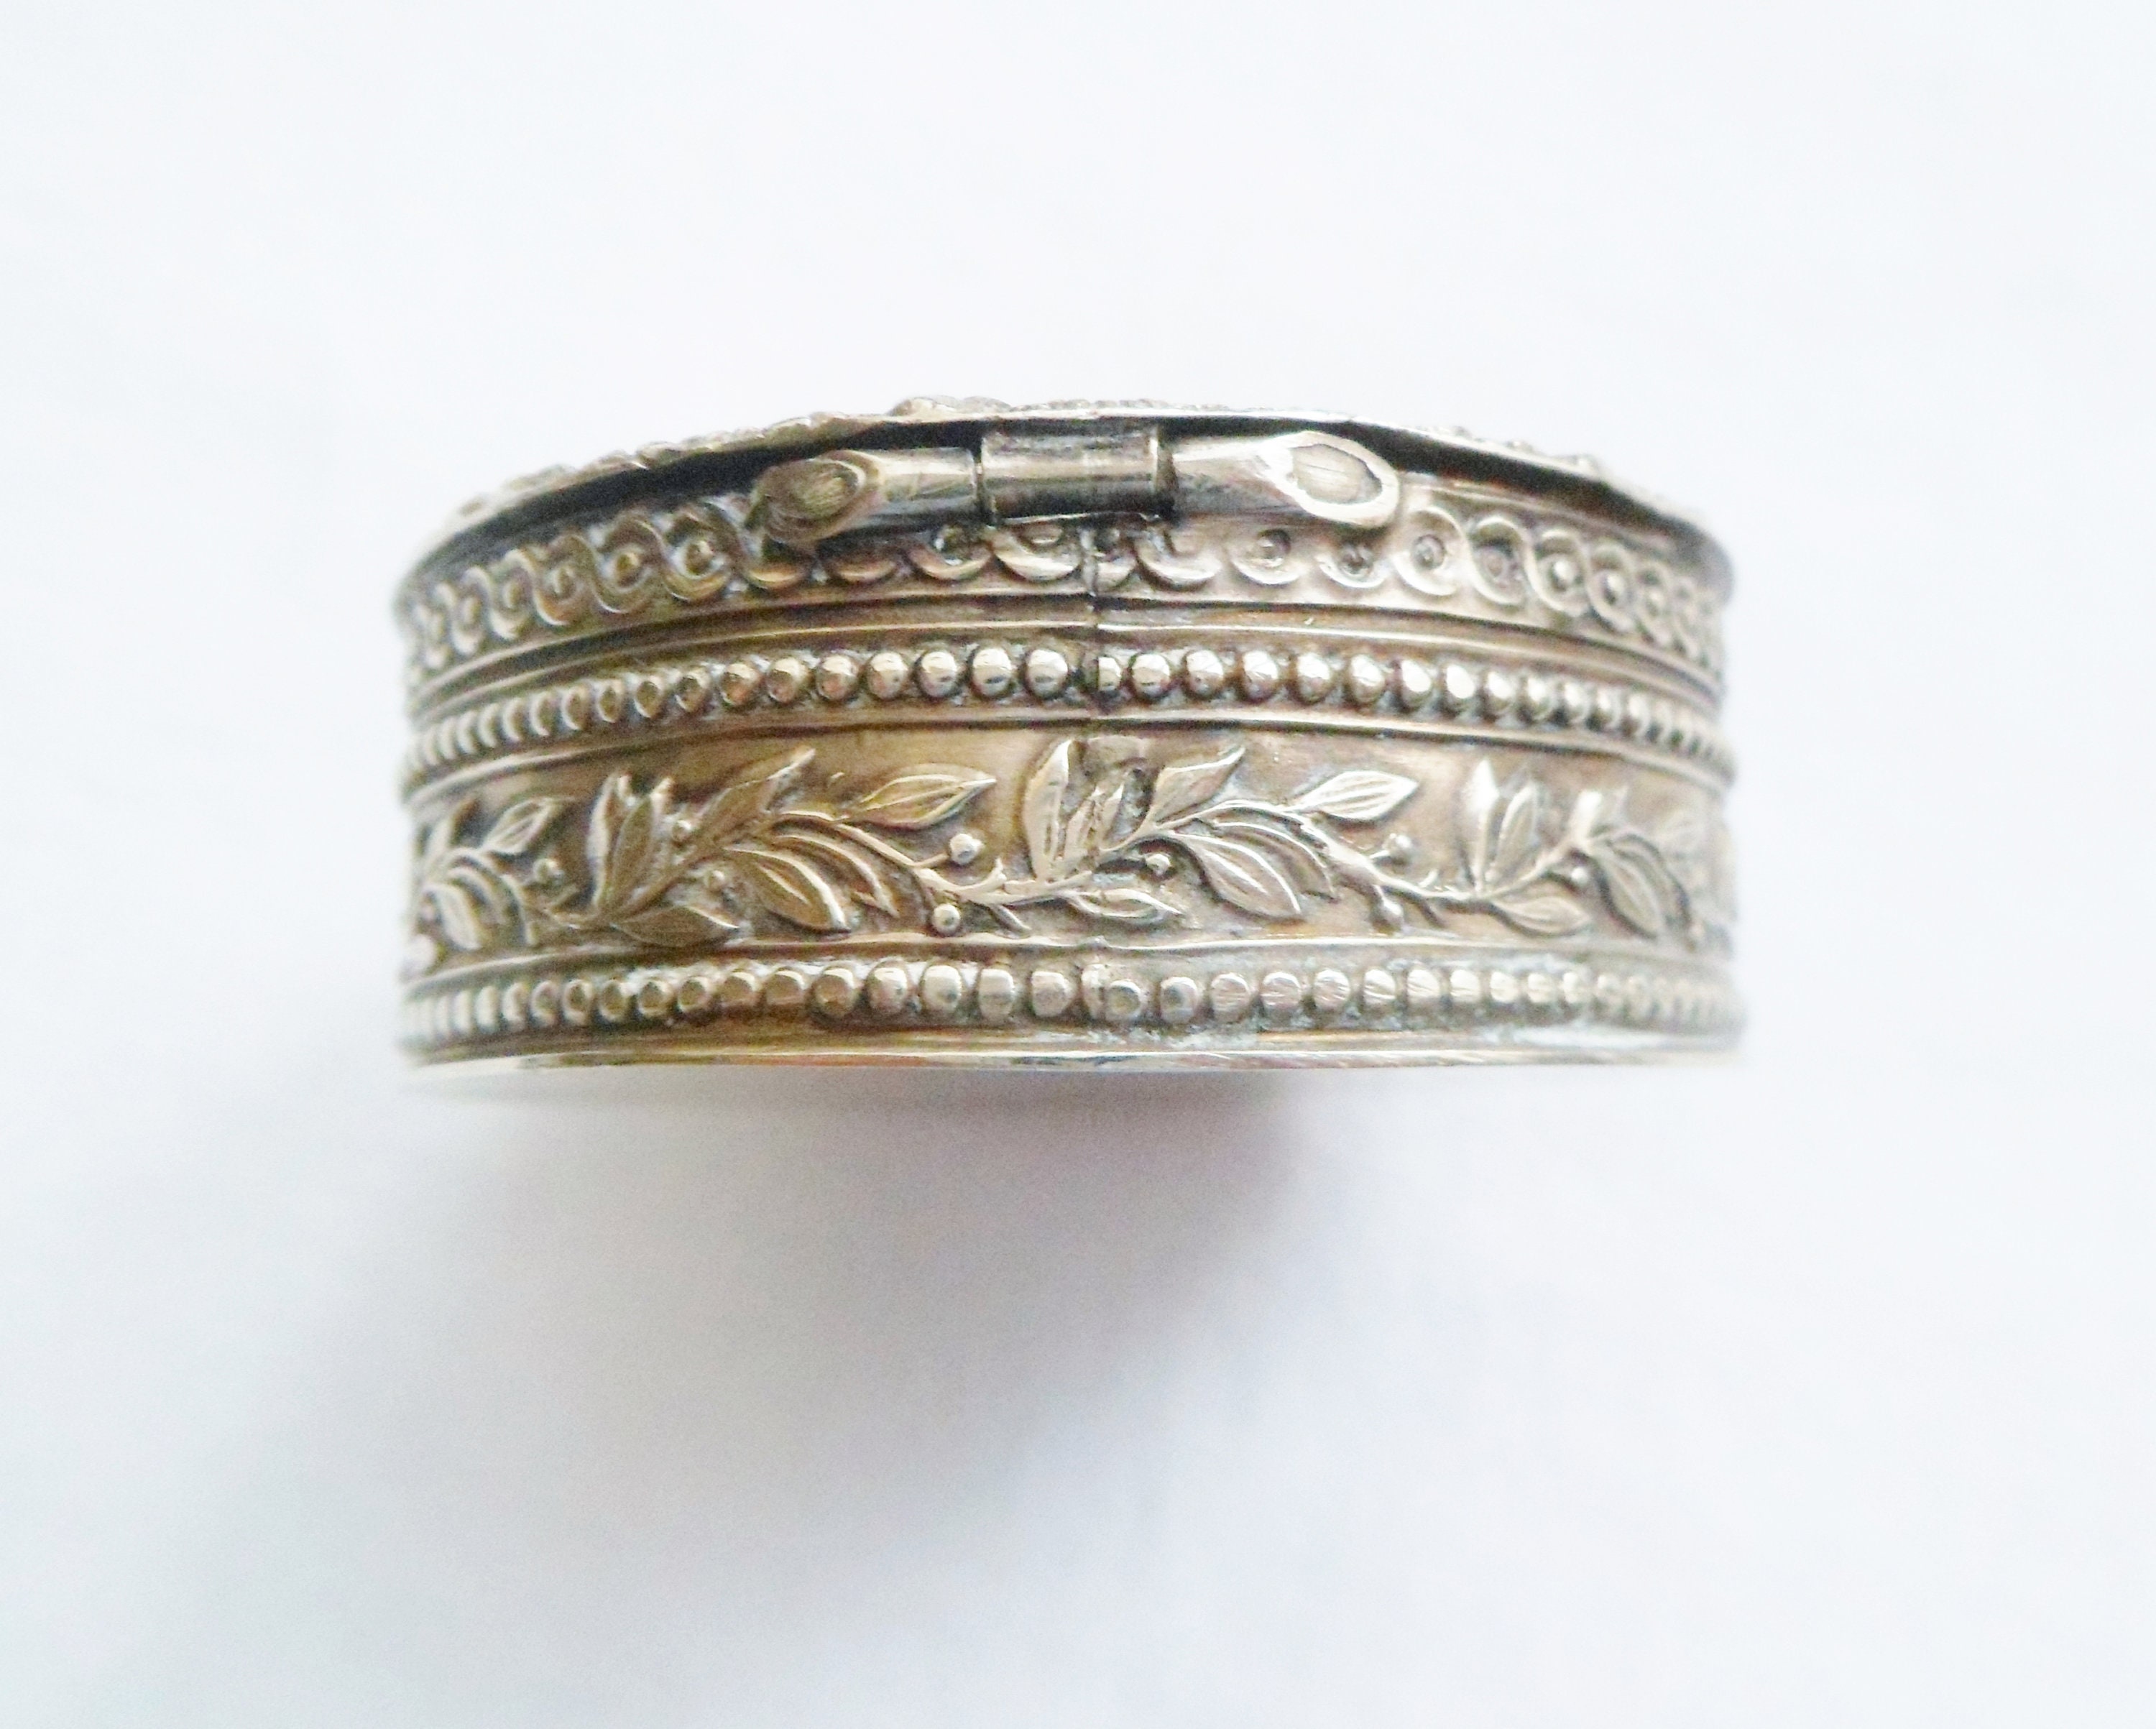 Victorian Silver Plate Cherubs Repoussé Jewel Casket ~ Antique Jewellery Box Angels ~ Vintage Germany Putti Trinket Box